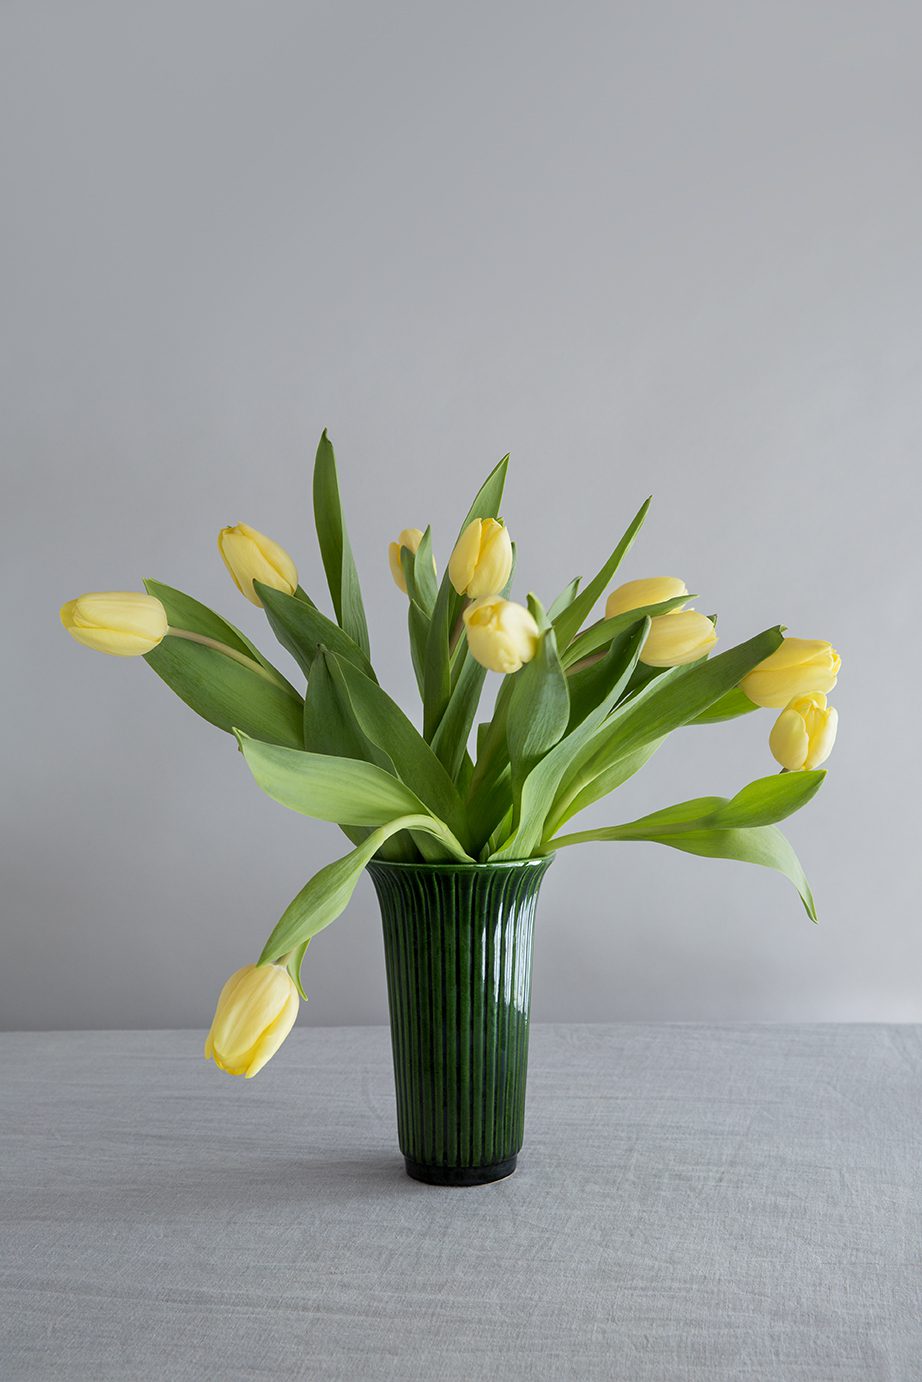 Glazed green slim vase with yellow tulips.